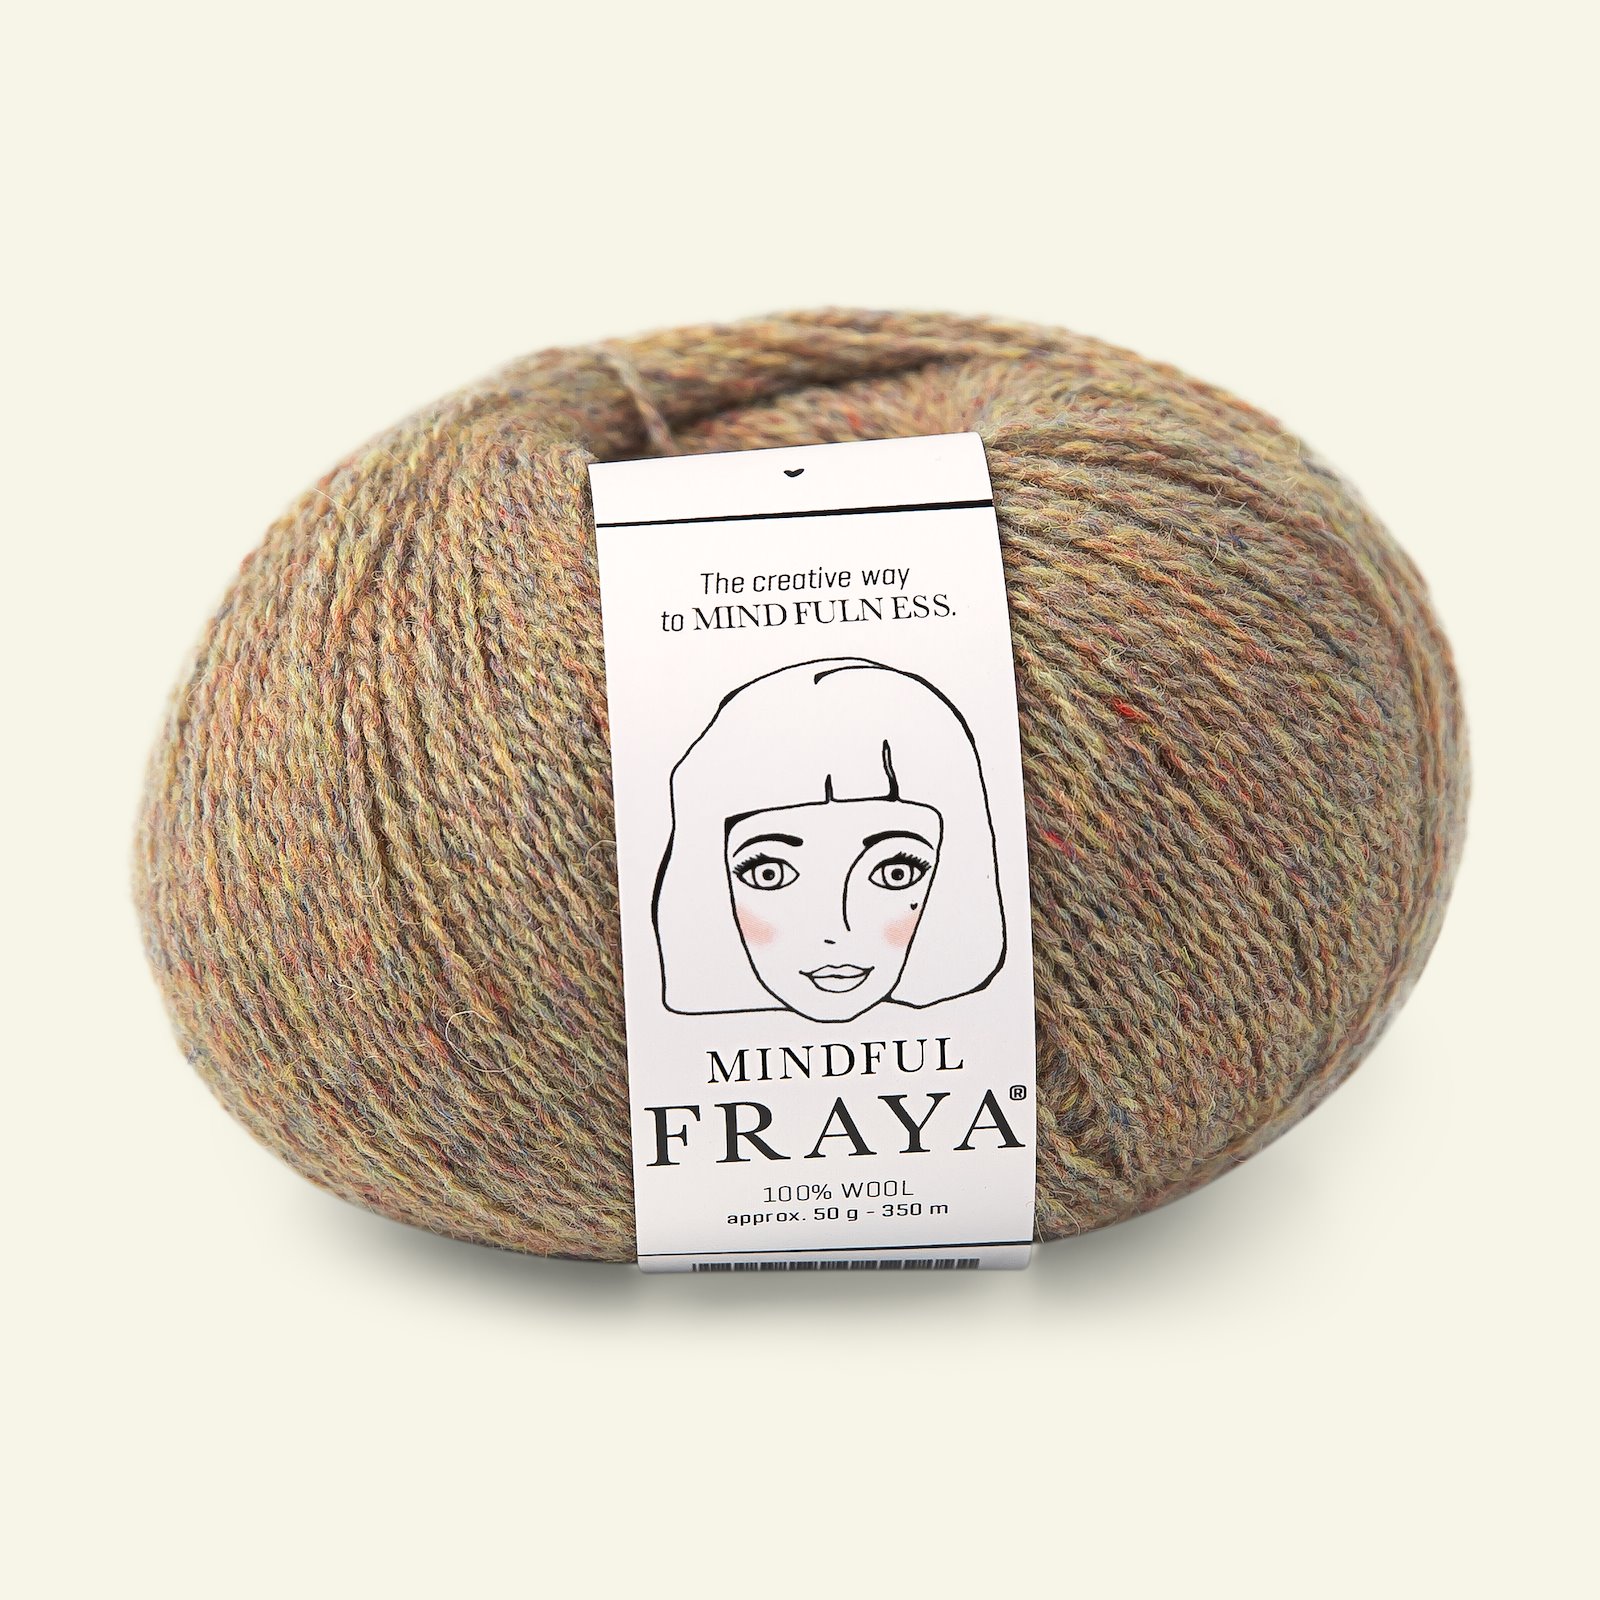 FRAYA, 100% wool yarn "Mindful", clay melange 90053380_pack